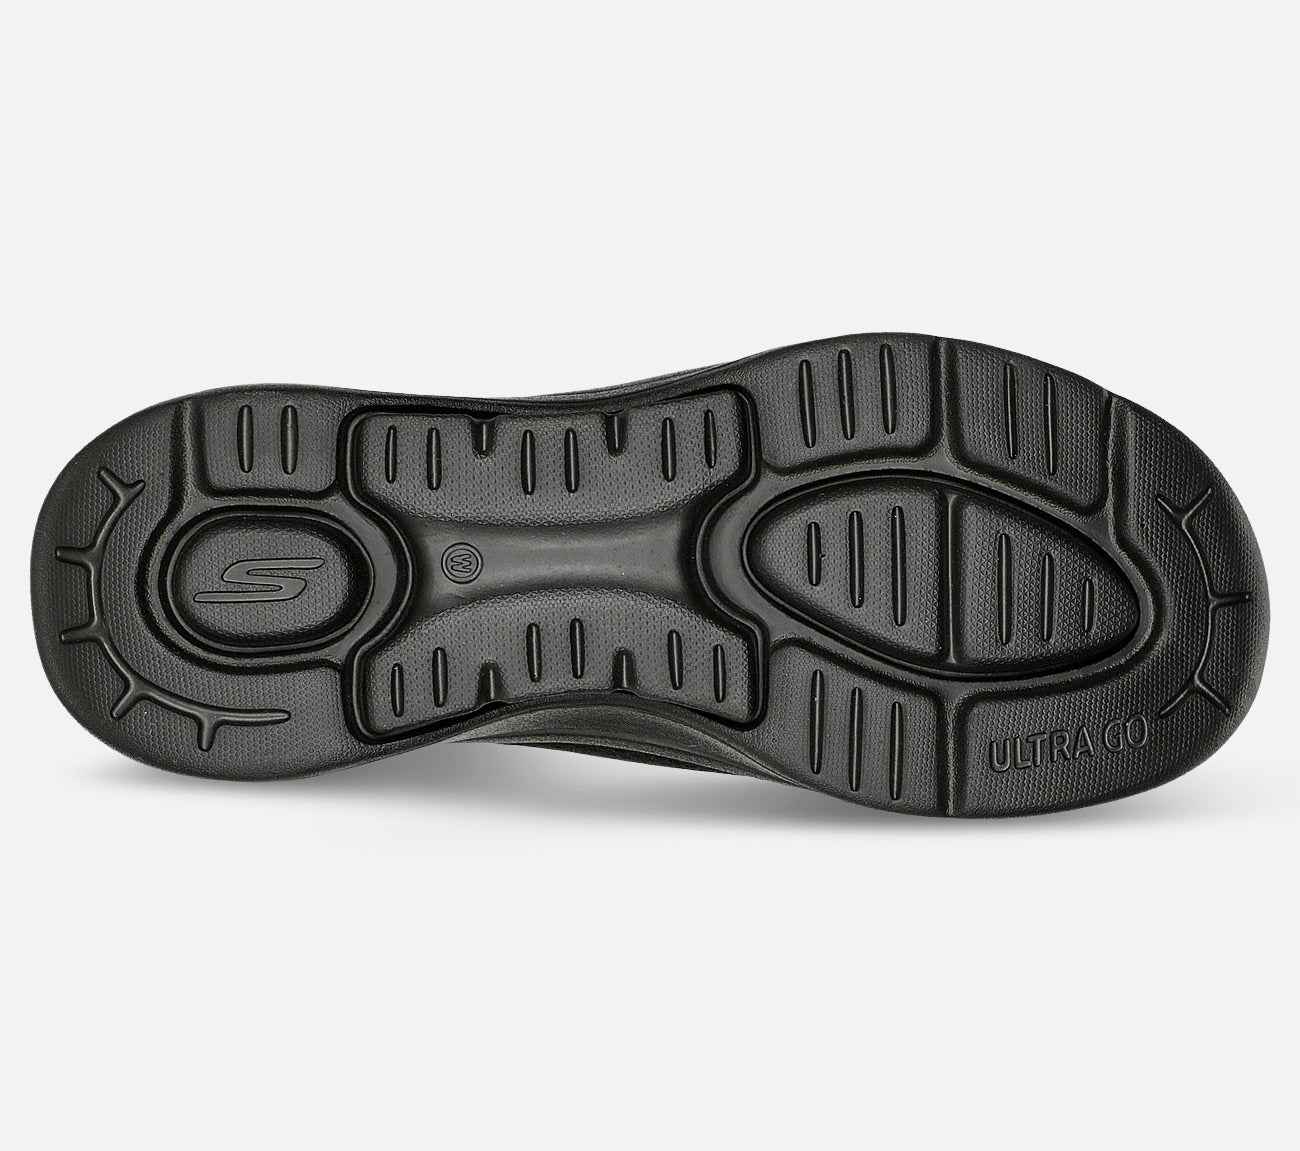 Slip-ins: GO WALK Arch Fit - Summer Shoe Skechers